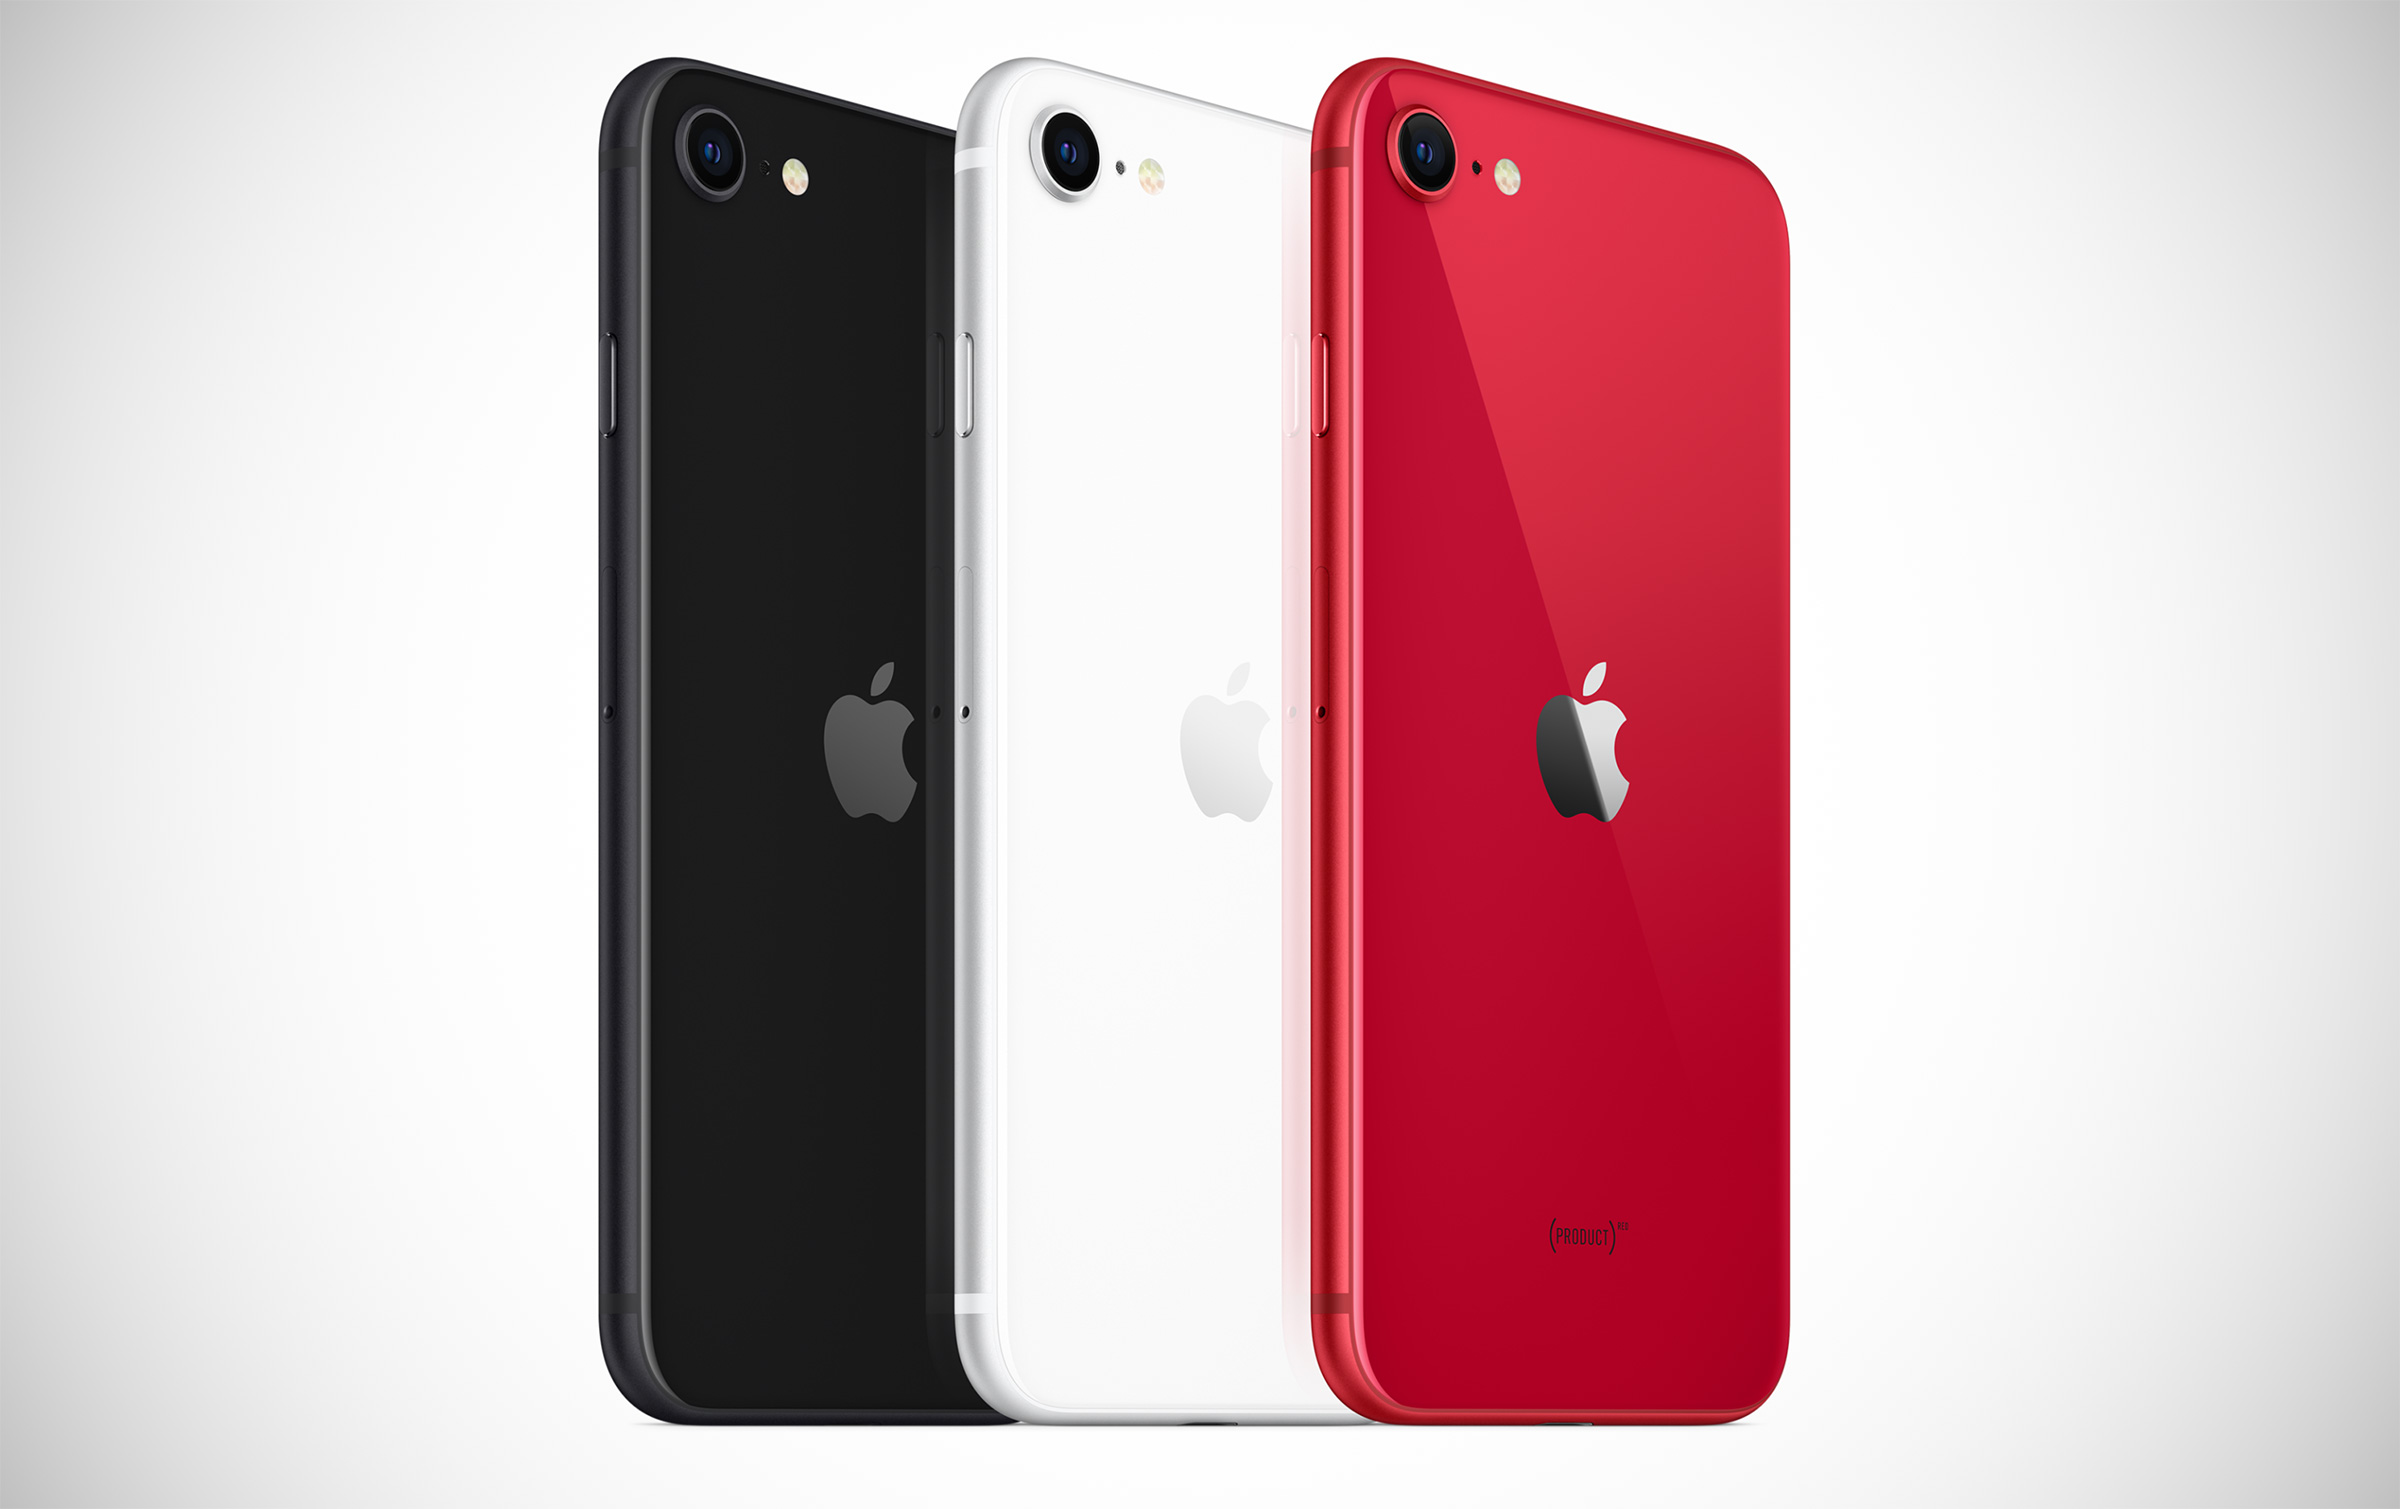 رسميا صور ومواصفات هاتف iPhone SE الجديد 2020